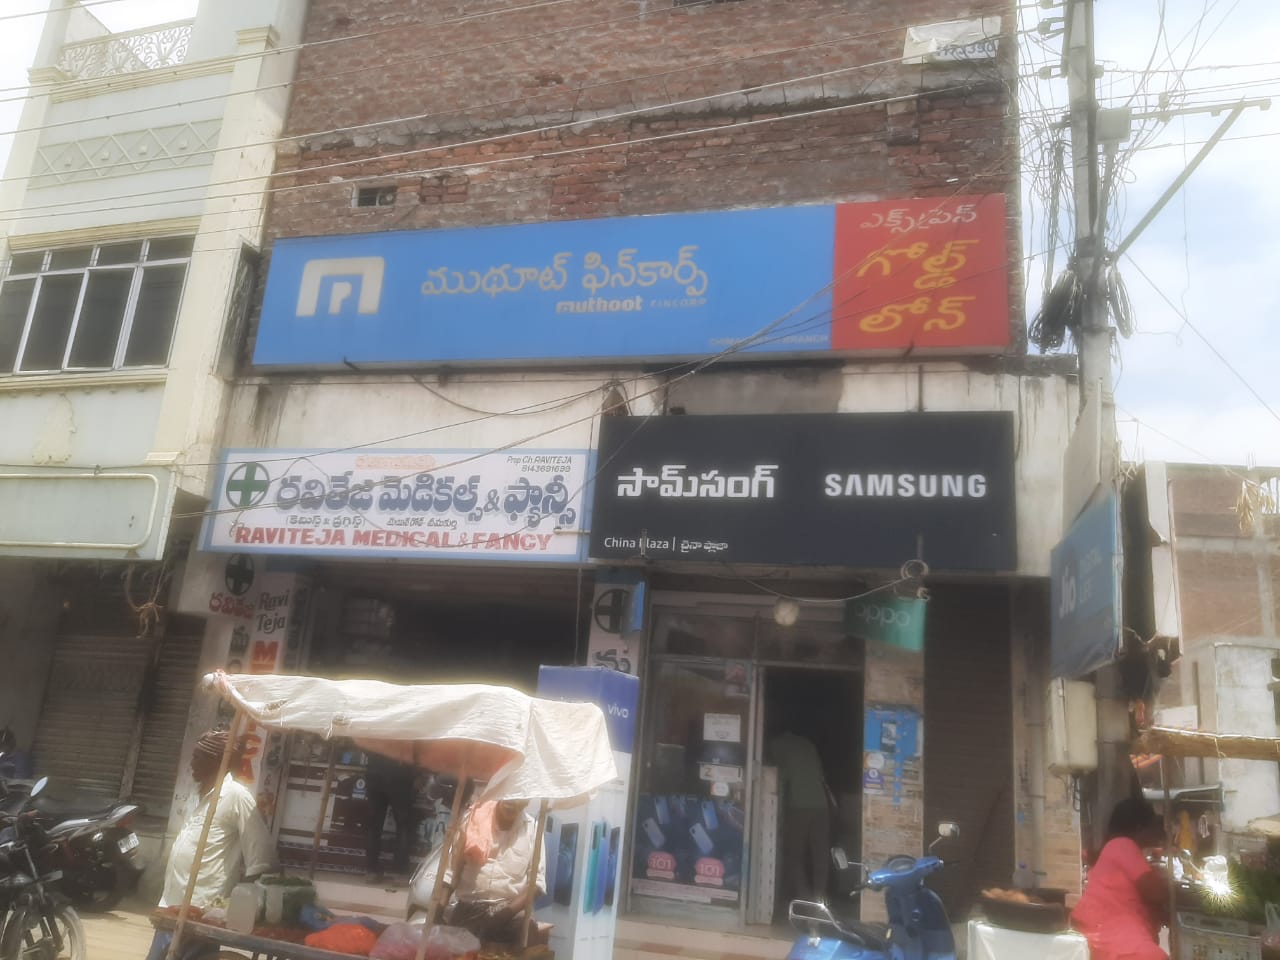 Muthoot Fincorp Gold Loan Services in Chimakurthy, Prakasam, Andhra Pradesh